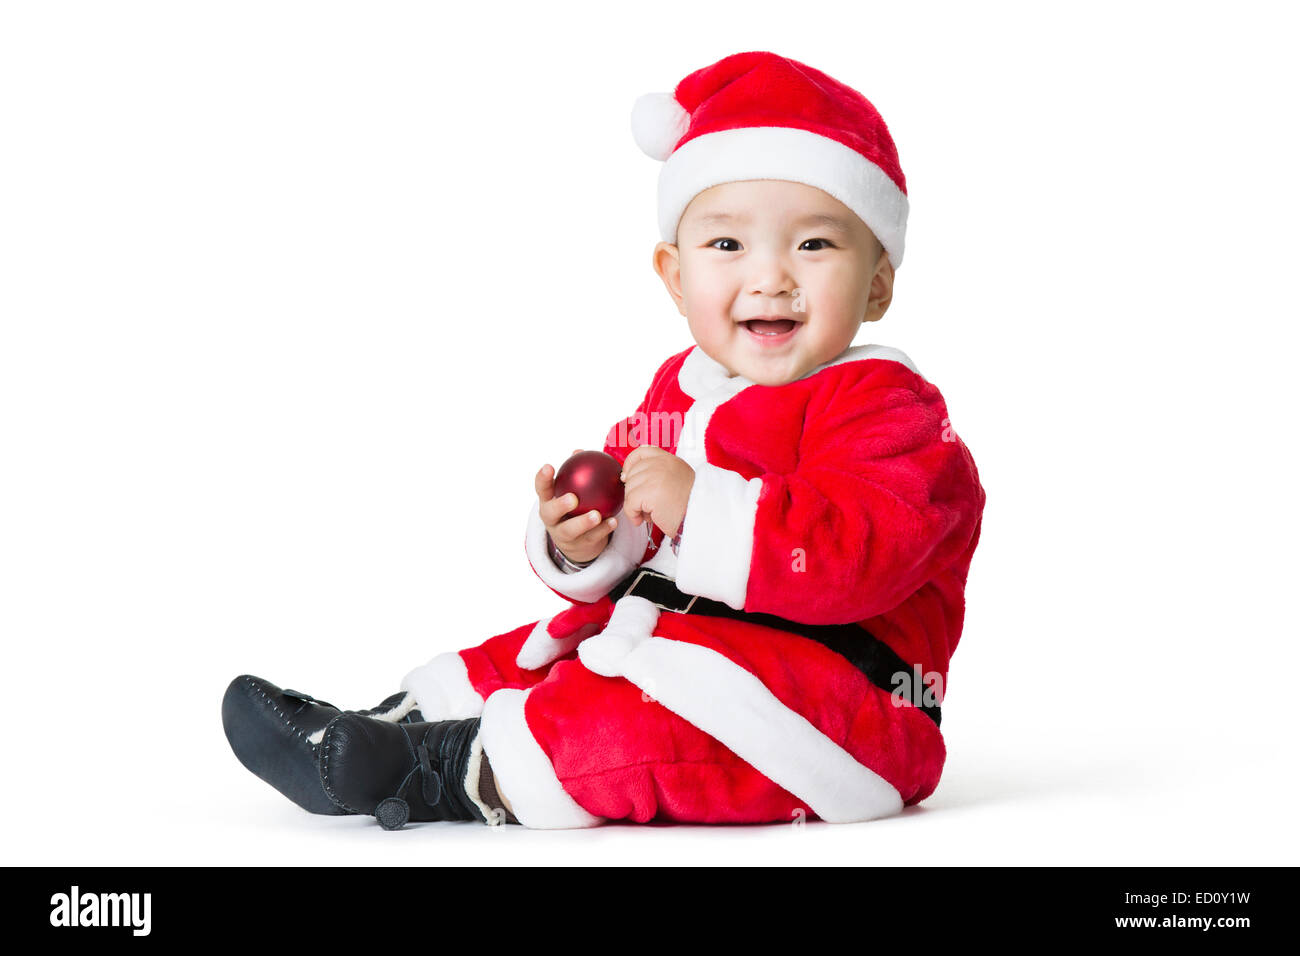 Cute baby in Santa suit Stock Photo - Alamy